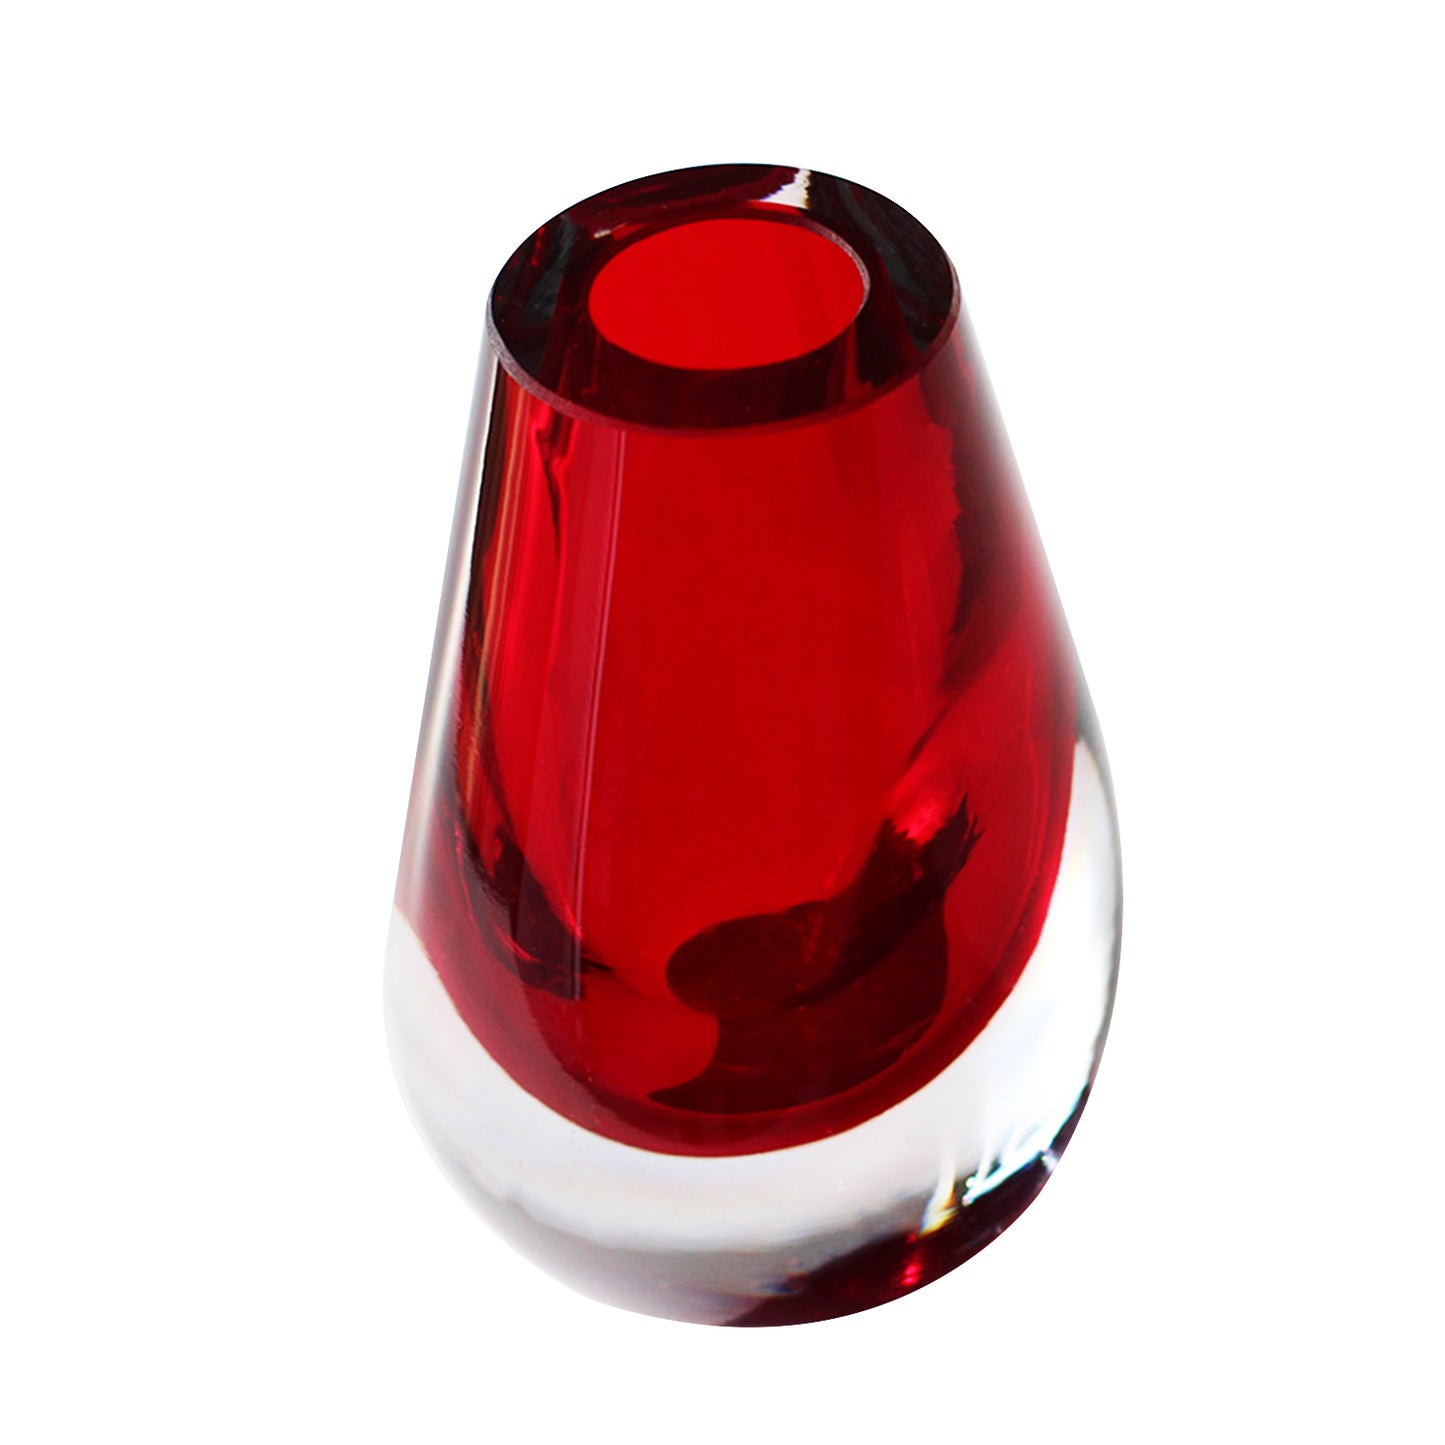 Drop Red Vase - 15 x 10.9 x 8 cm  - Thick Glass - Mount Blown - Eco-Friendly